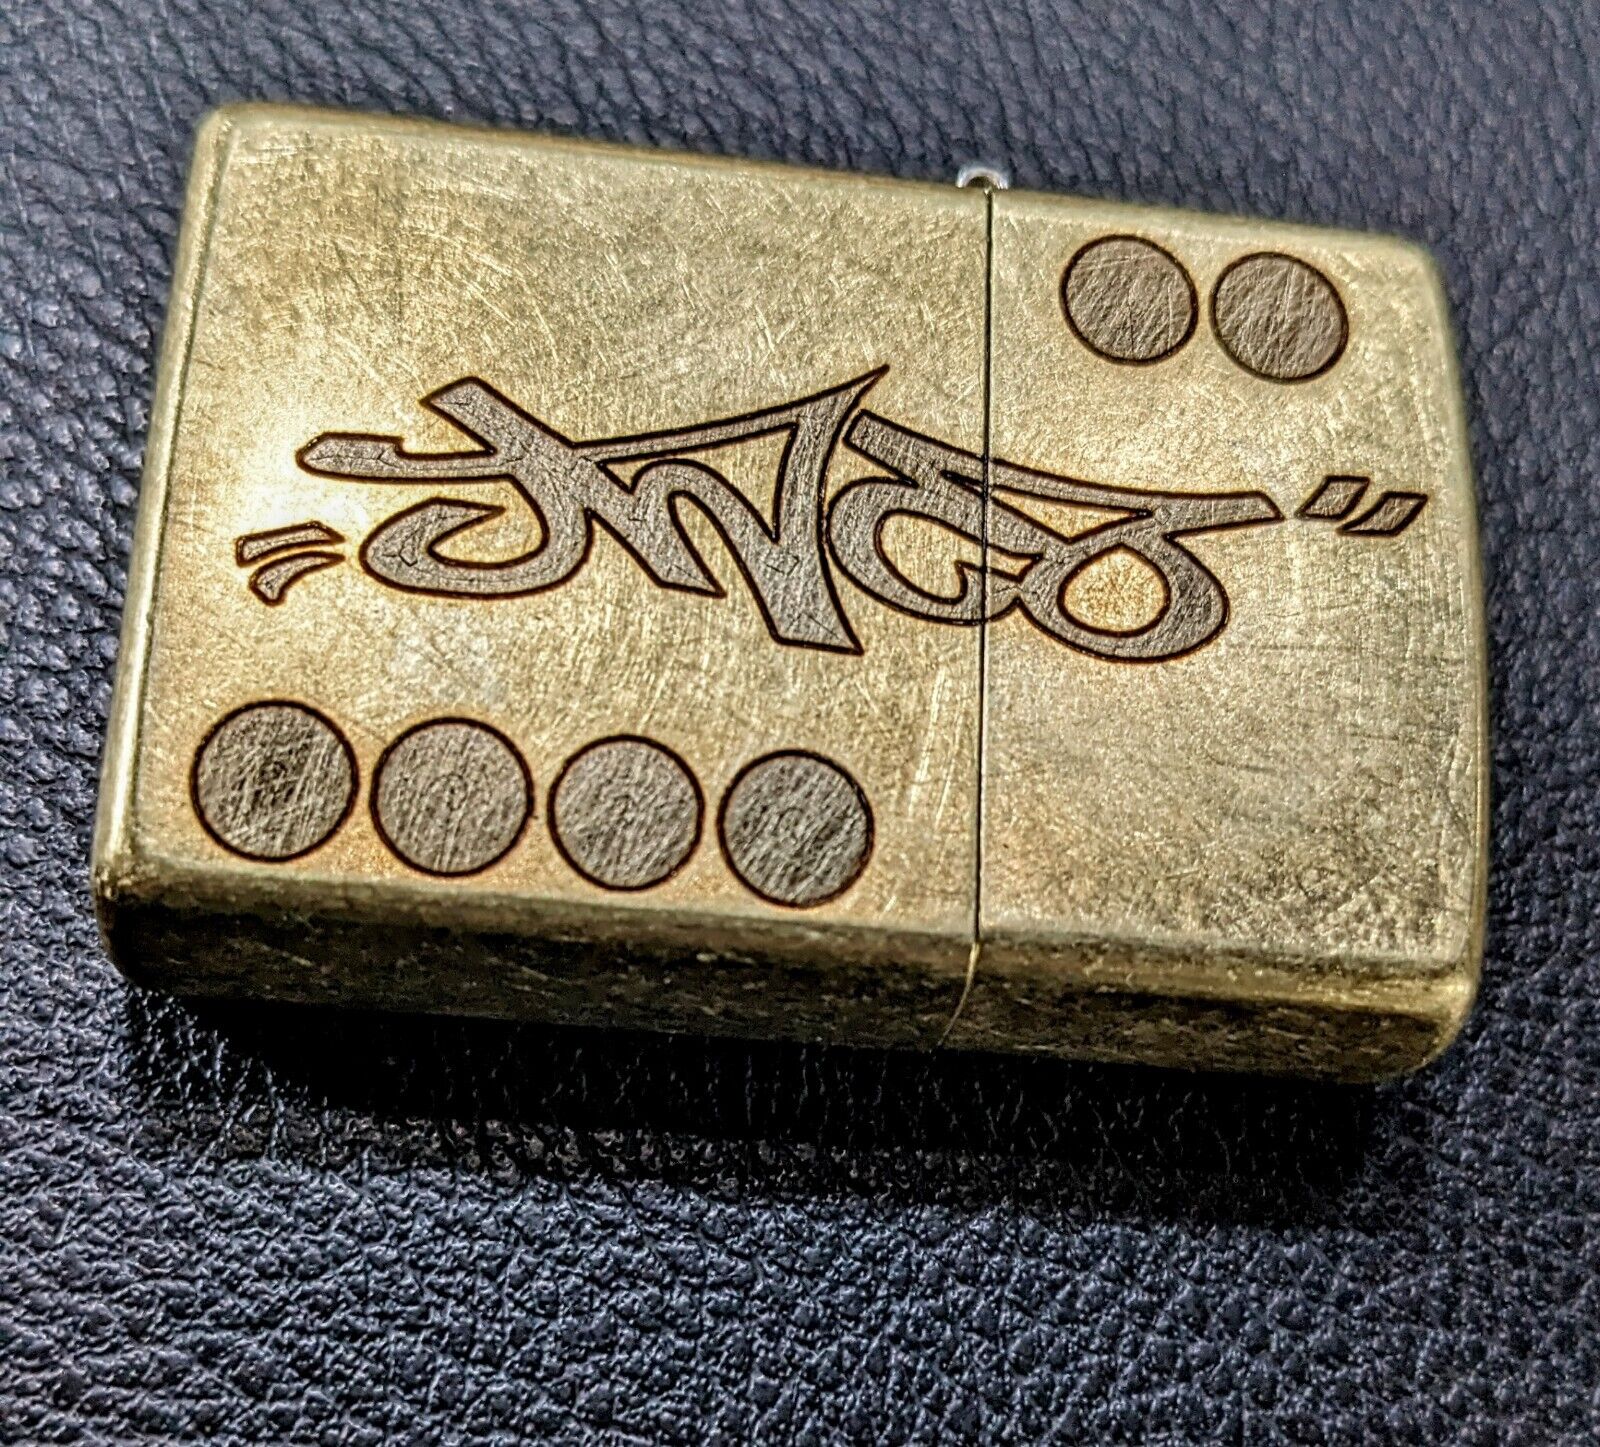 JNCO Rare All Brass Zippo Nice With Gold Tone. Classic Graffiti Logo 😎